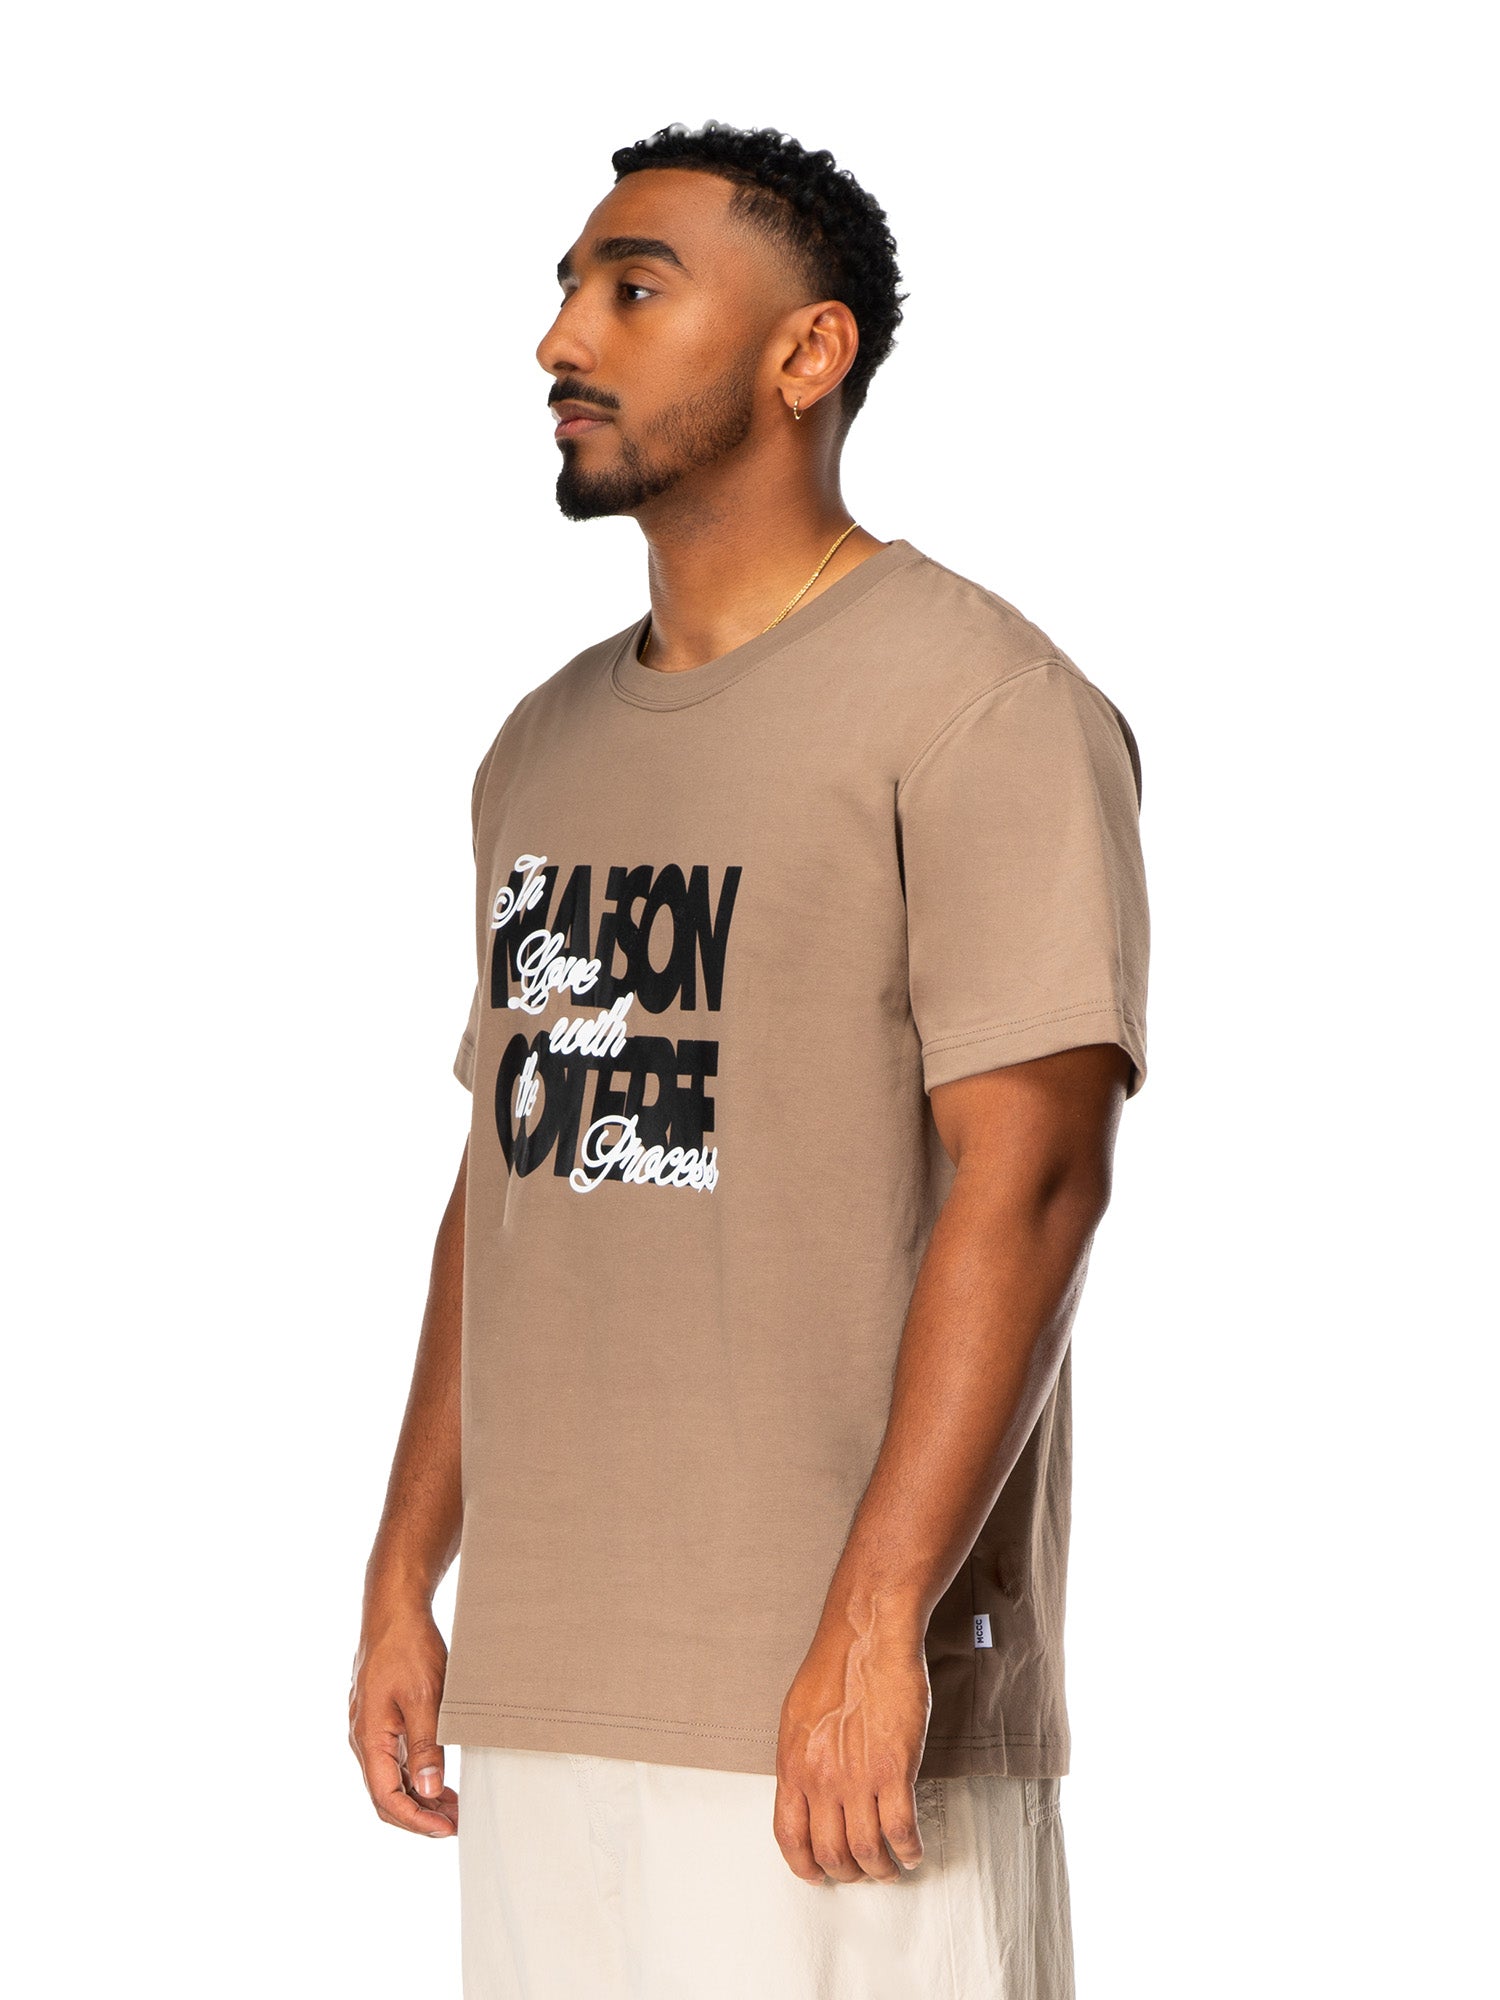 Michael - Graphic T-Shirt - Beige